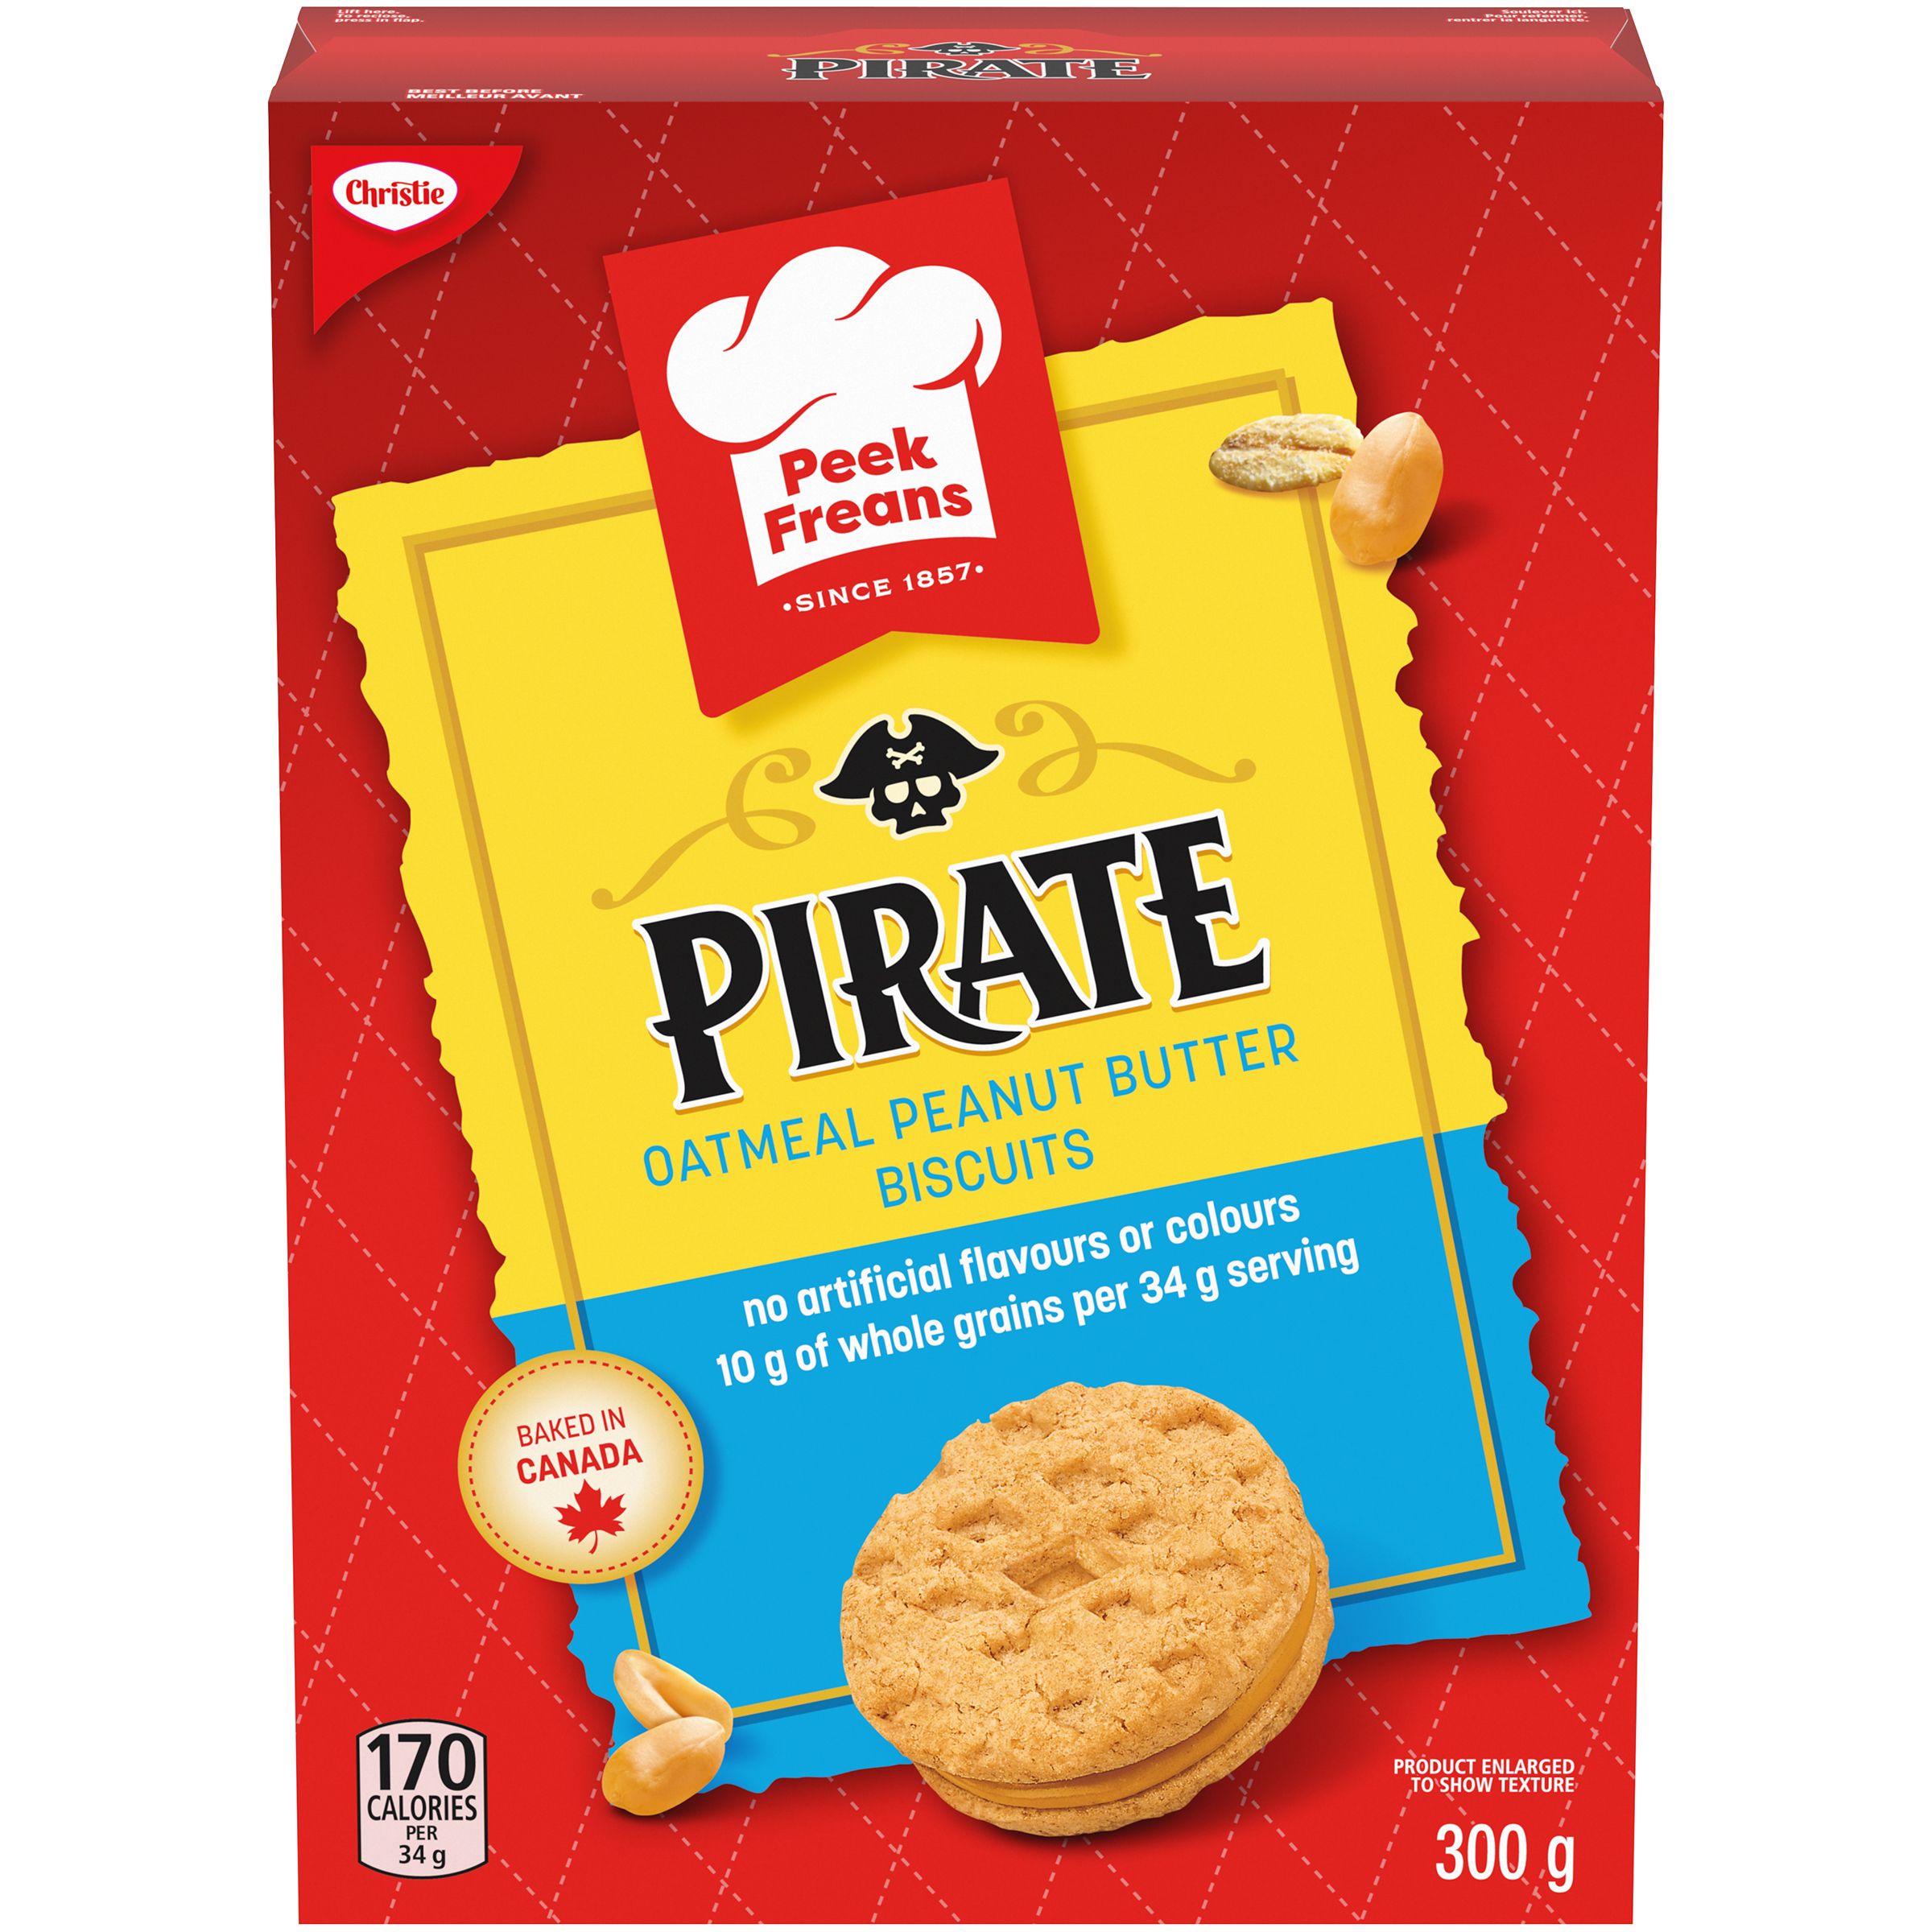 Peek Freans Pirate Oatmeal Peanut Butter Cookies, 300G-thumbnail-1